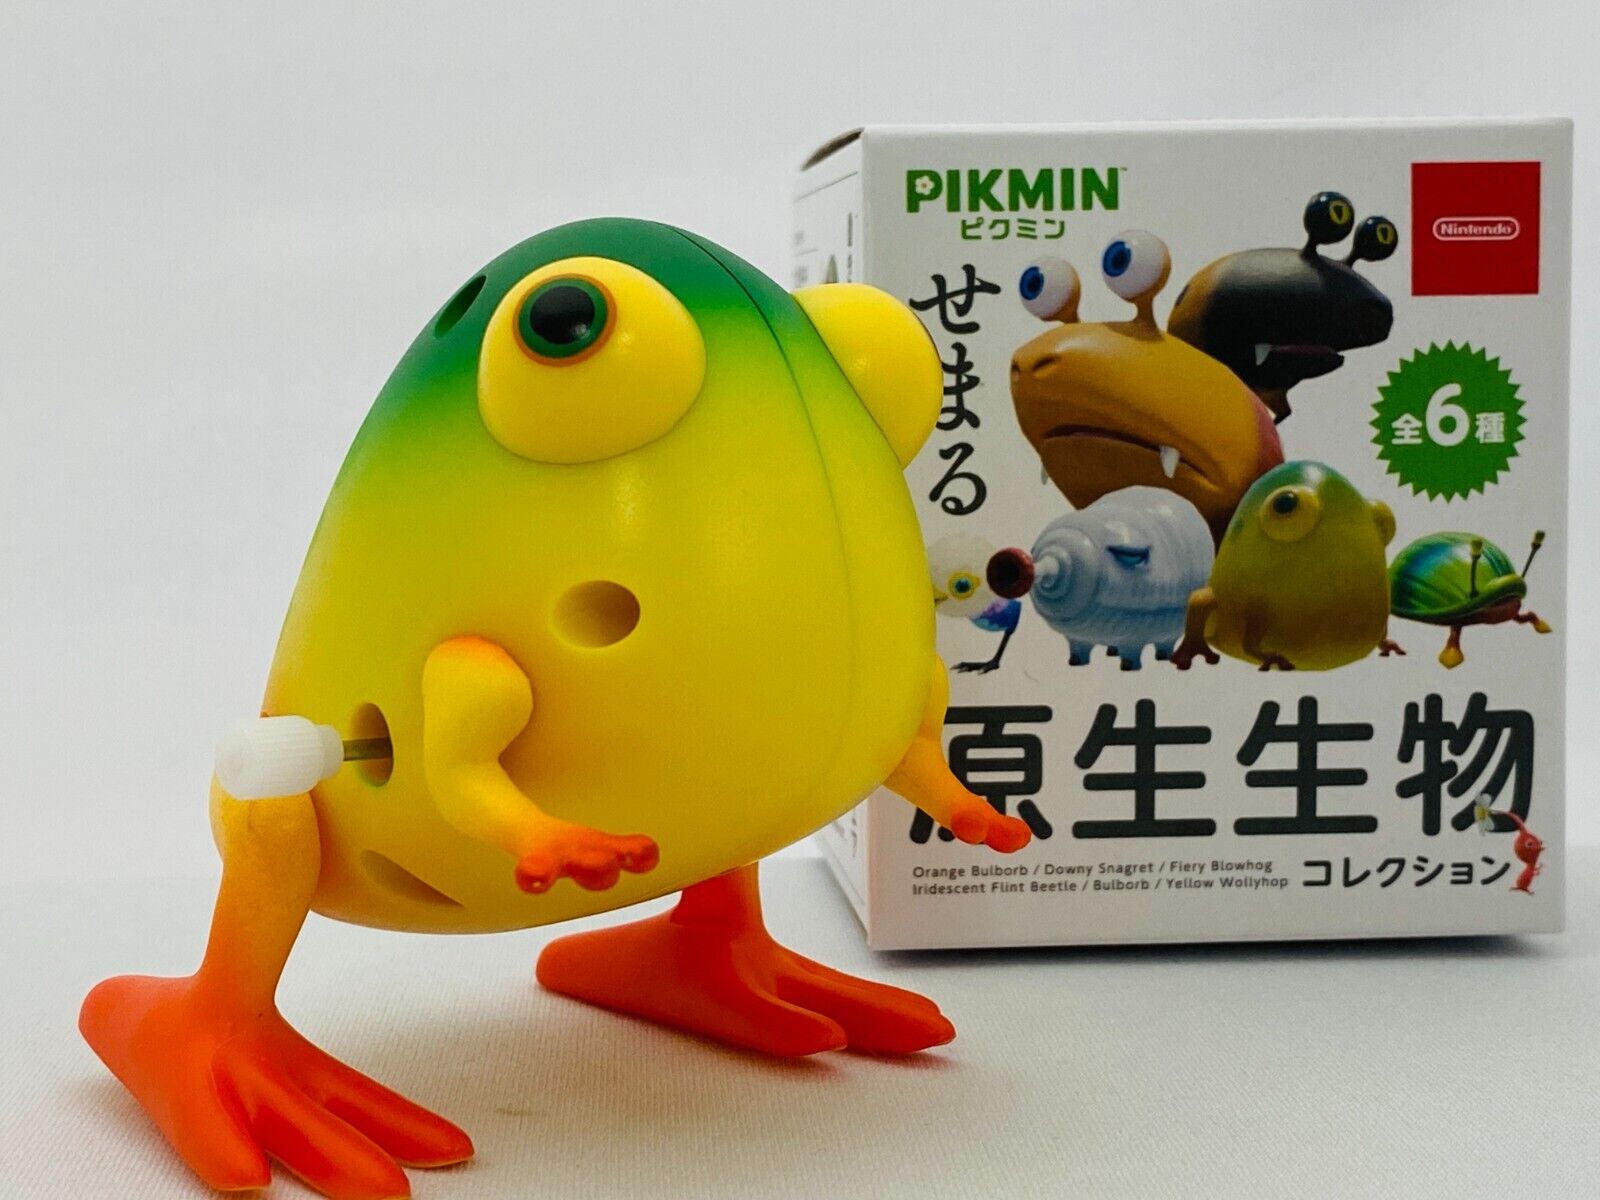 Nintendo Pikmin Protist Collection /3.  Yellow Wolluwog / Figure toy Japan New